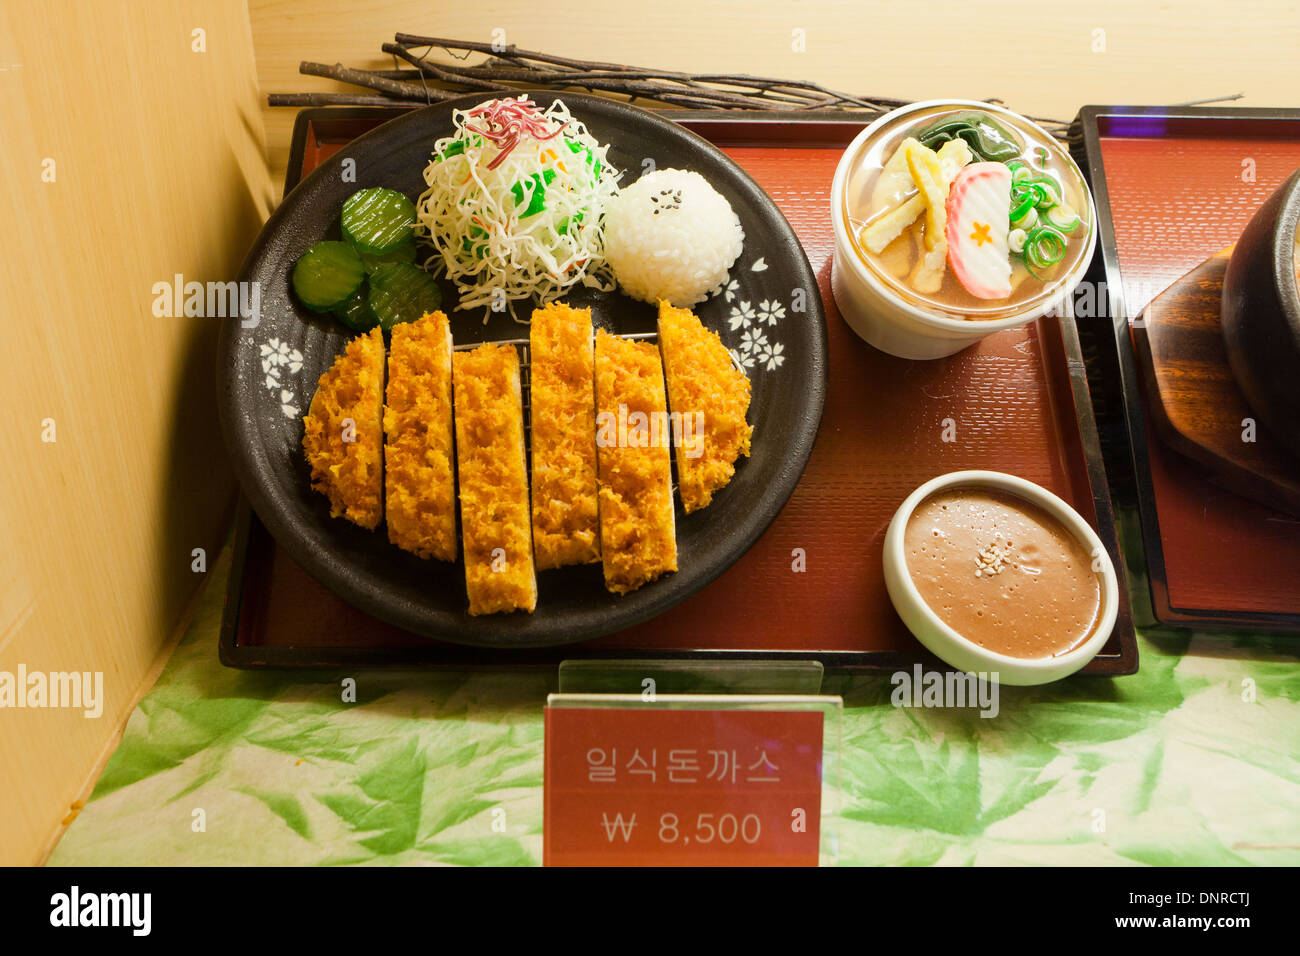 Plastic food model (tonkatsu - breaded pork cutlet) display case at fast food restaurant - Seoul, South Korea Stock Photo